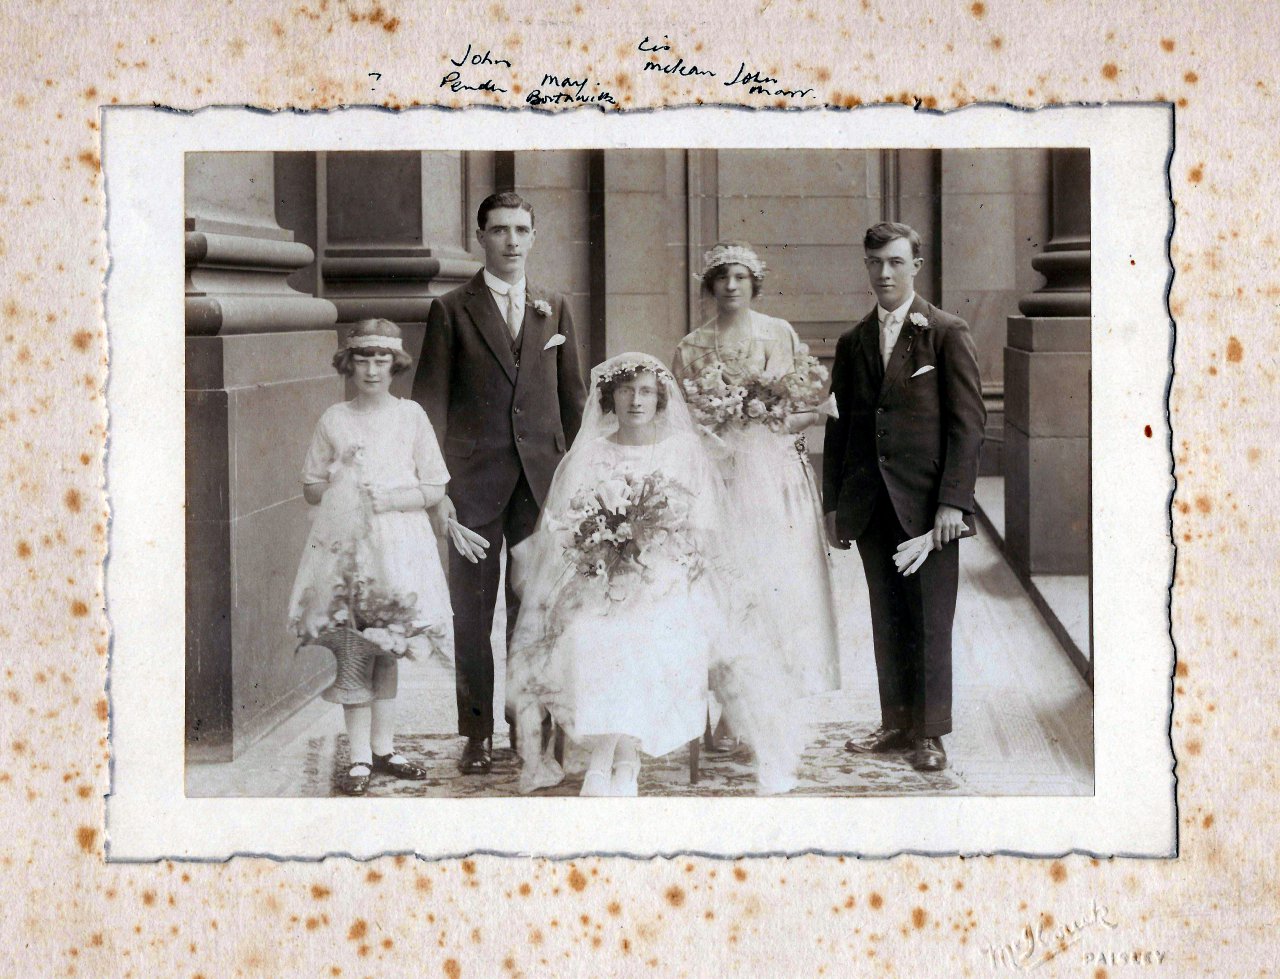 John Pender & Mary Borthwick, Wedding 1923